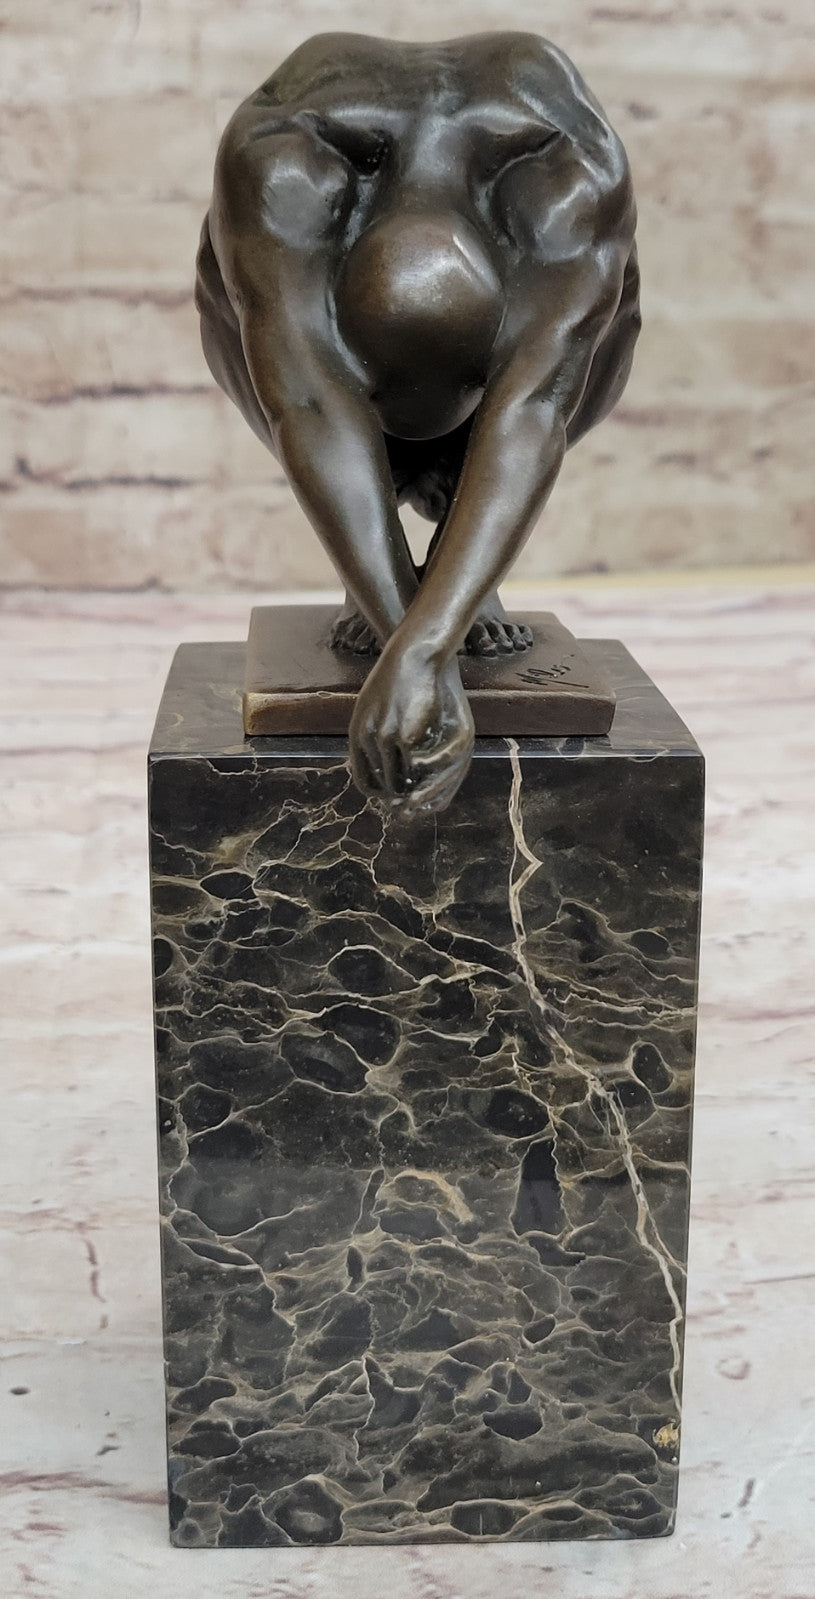 Art Deco Nude Male Diver Bronze Sculpture Marble Base Figurine Figure Home Decor